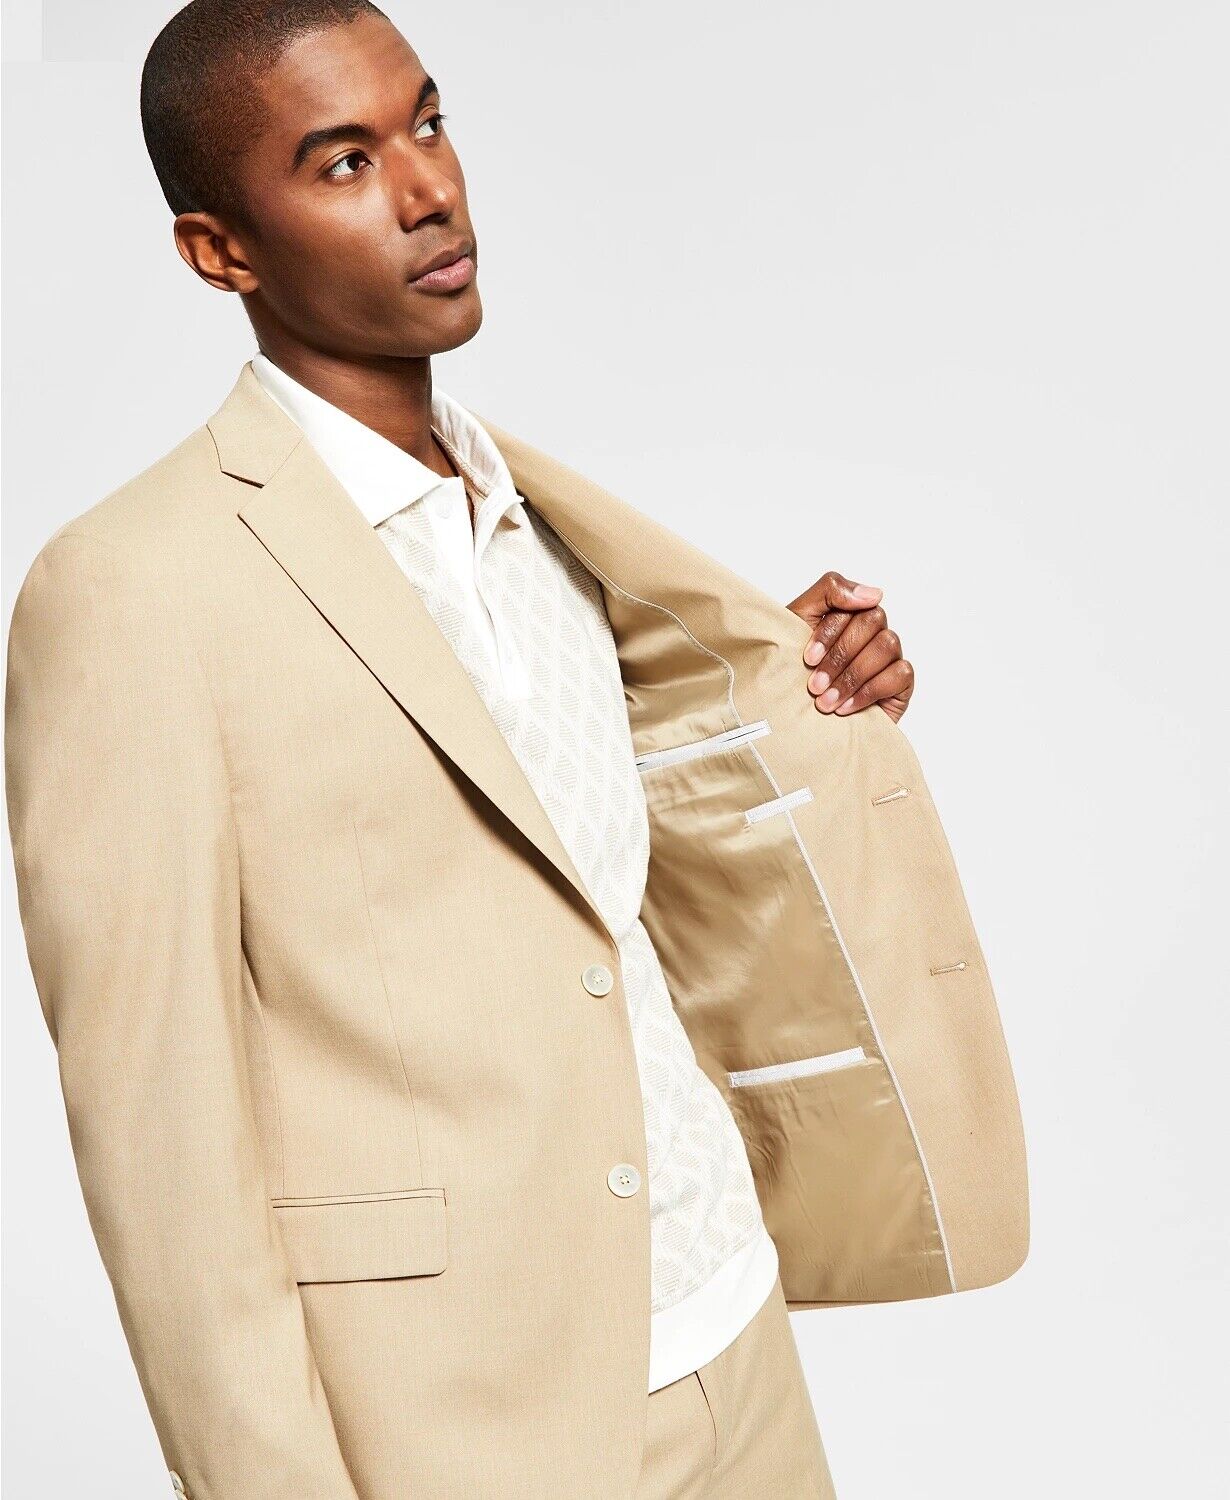 Alfani Men's Suit Jacket Caramel Brown 36S Slim-Fit Stretch Solid